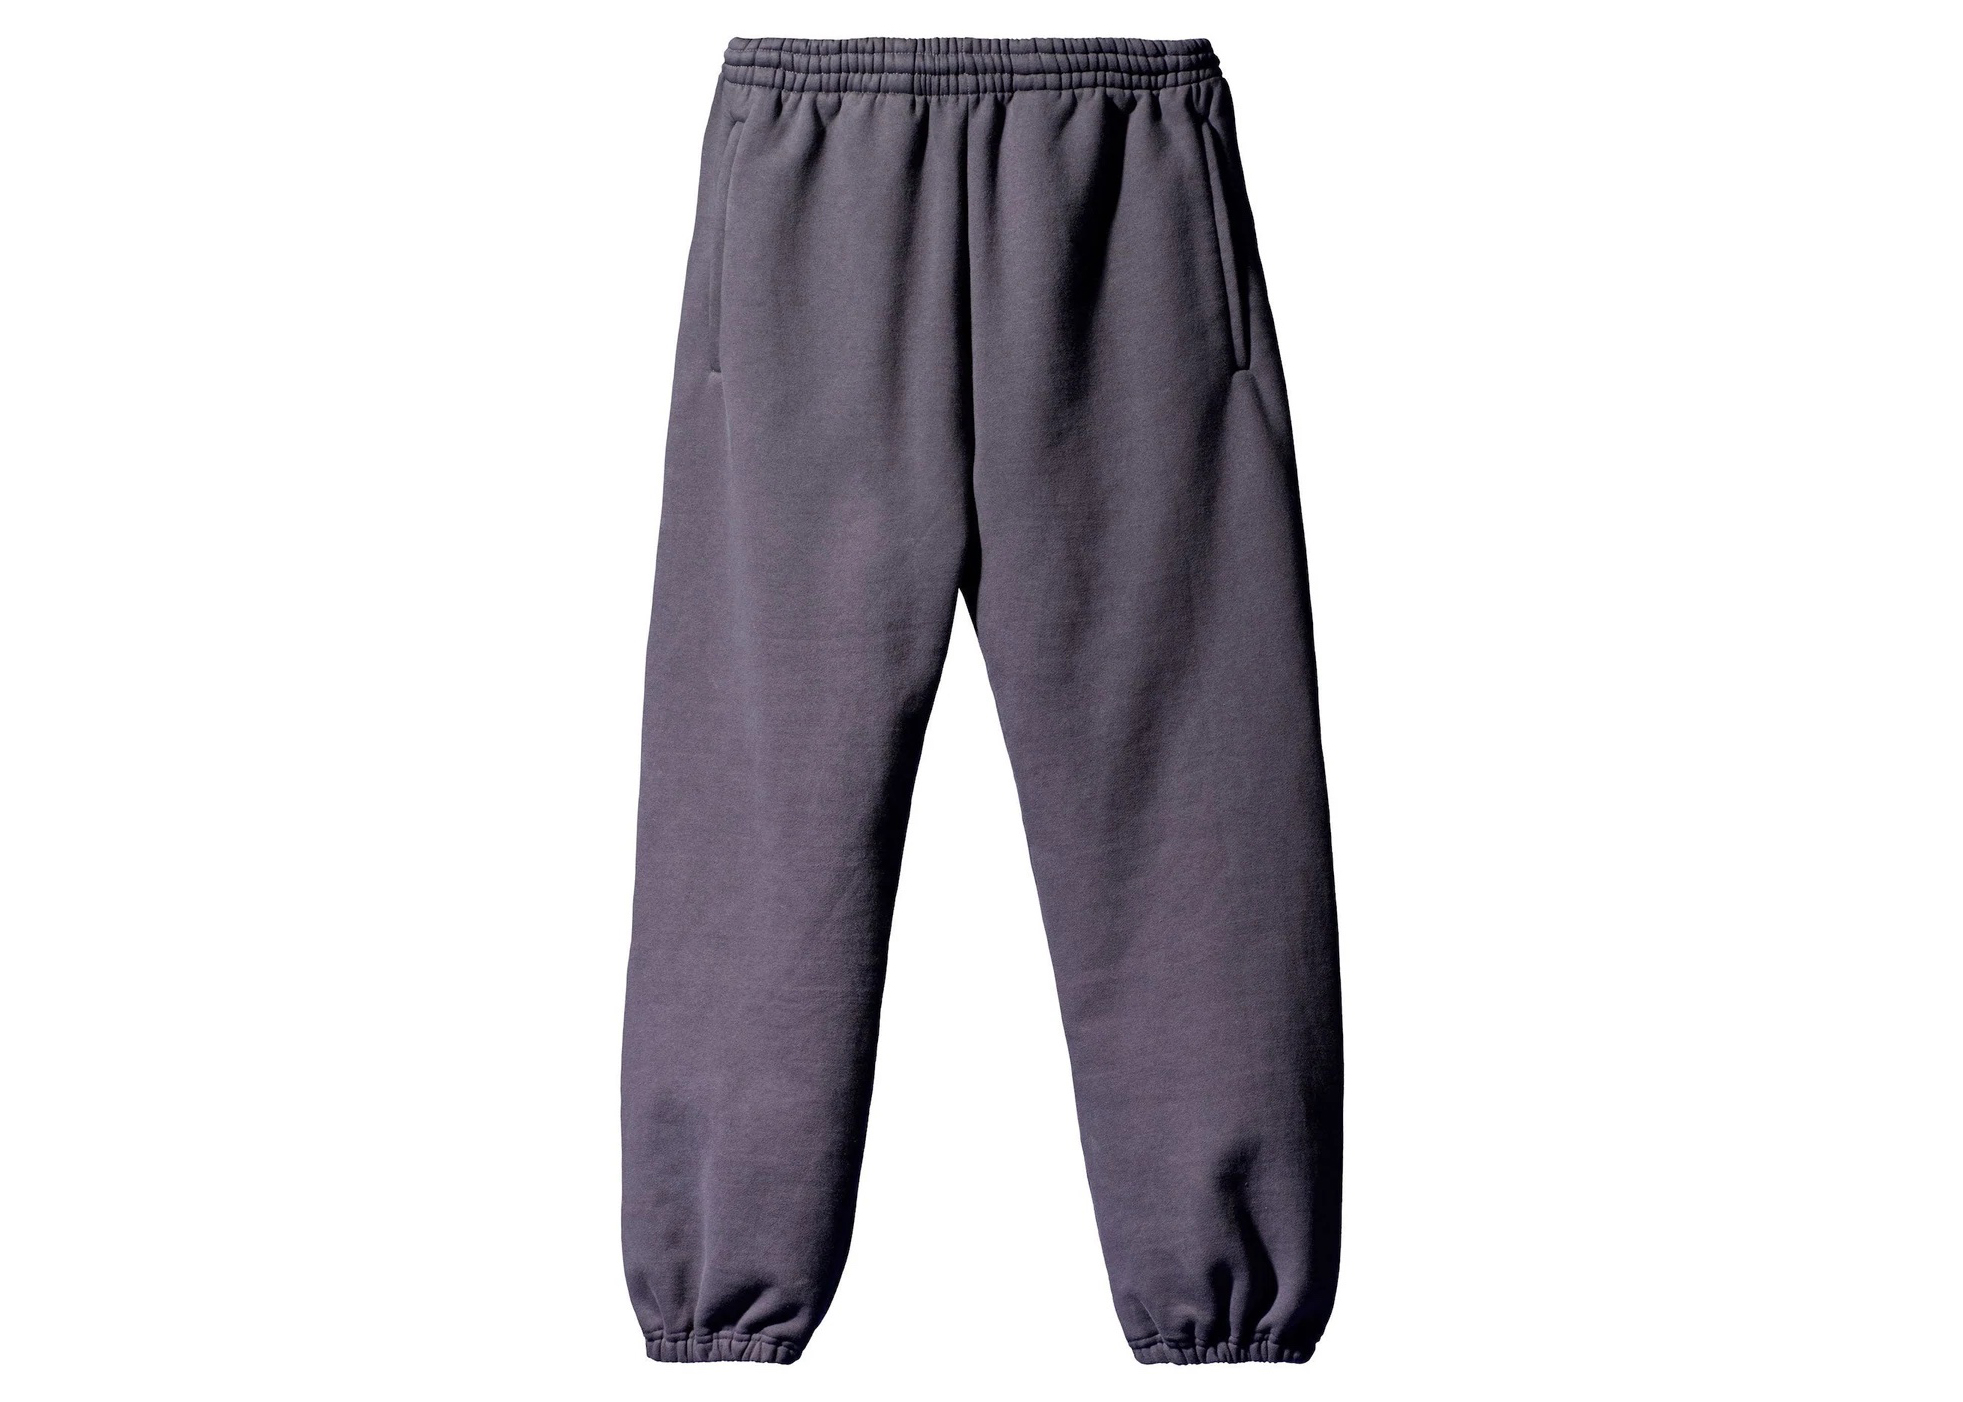 Buy Yeezy Gap Pants Streetwear - StockX